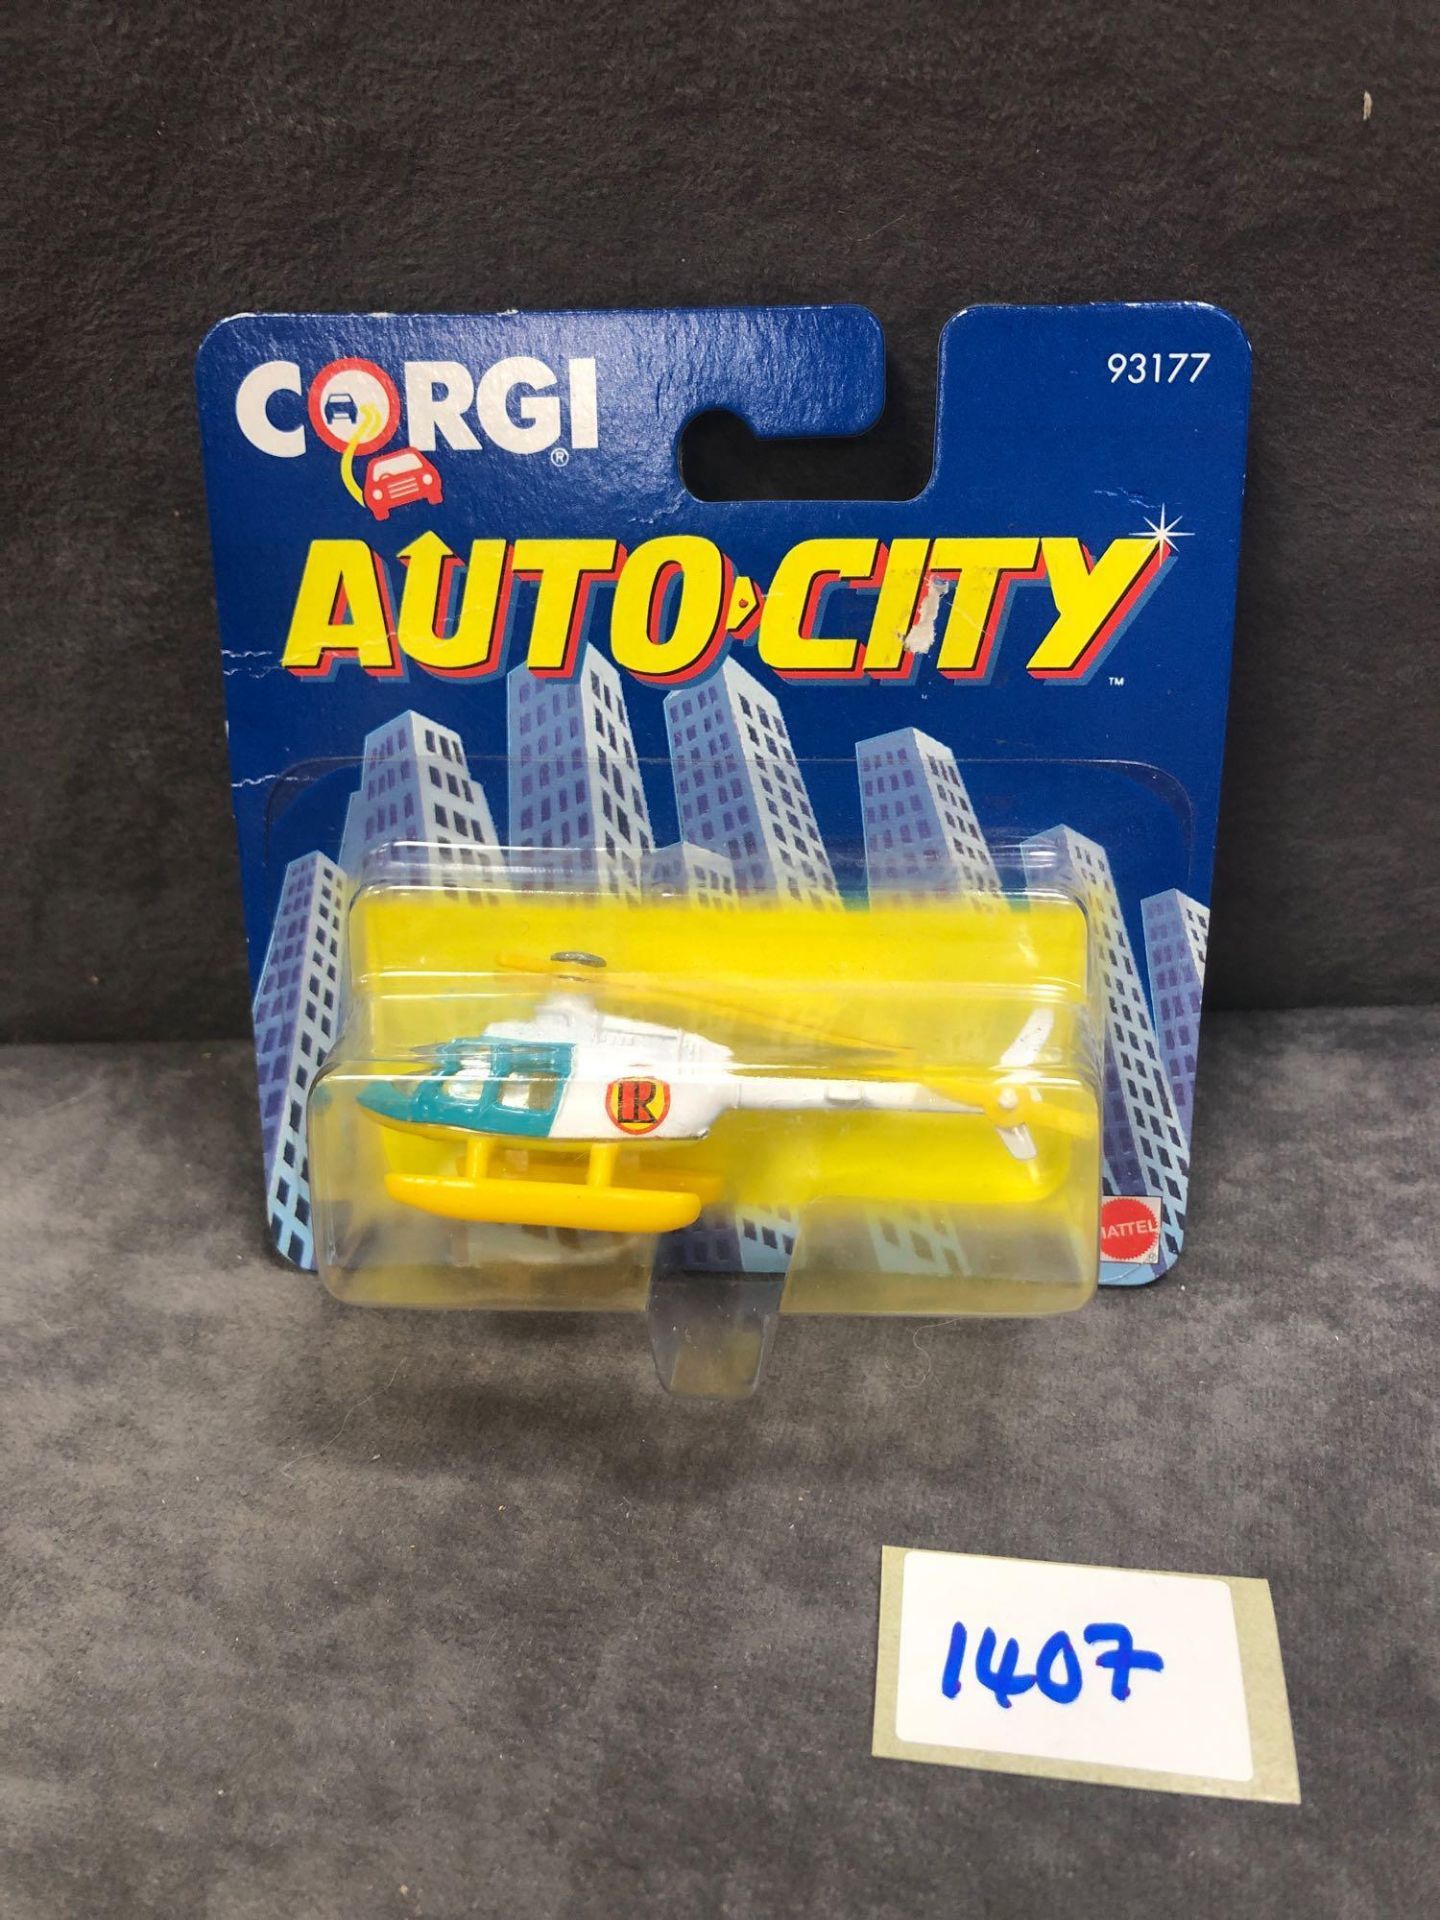 Corgi Junior Auto City Diecast #93177 Helicopter On Bubble Card